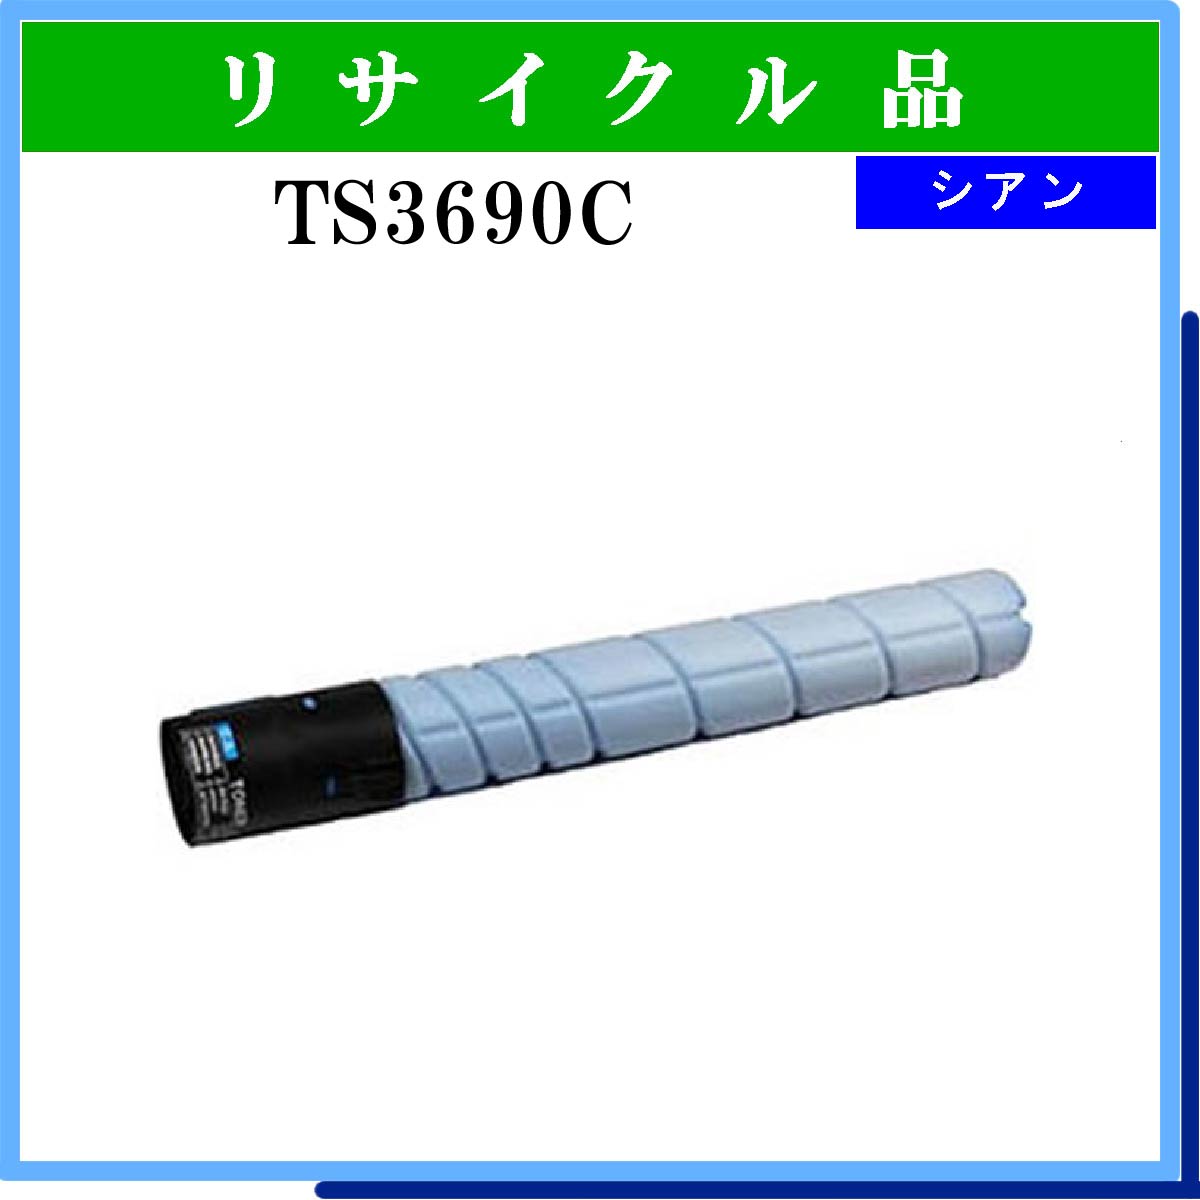 TS3690C